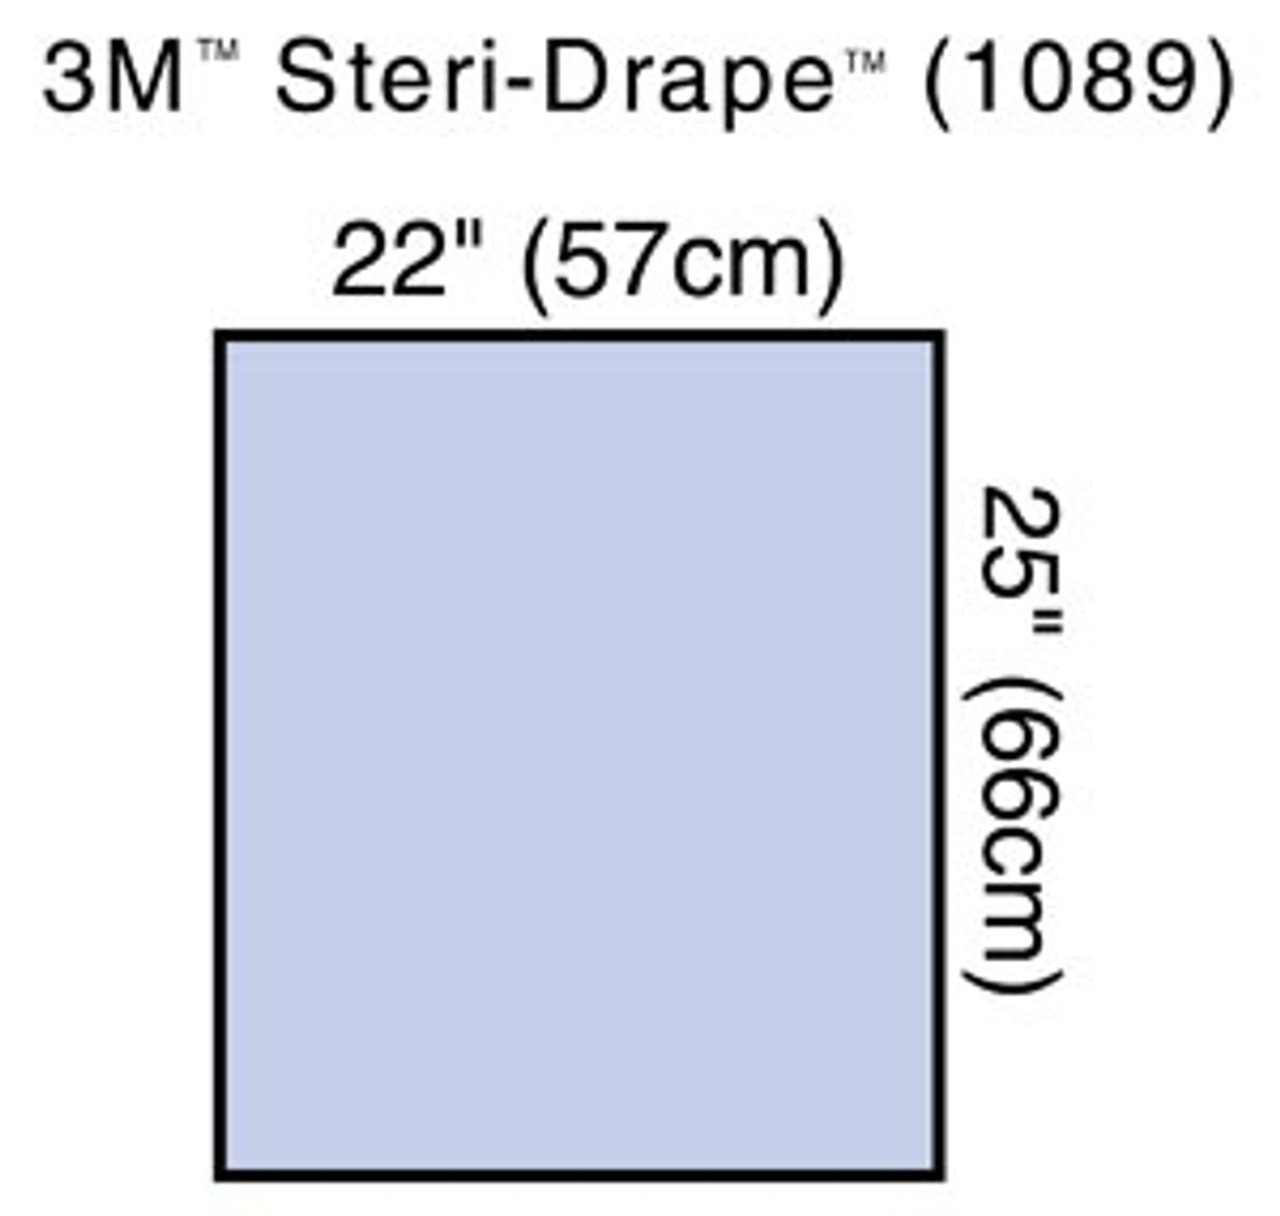 3M STERI-DRAPE HALF/LARGE & UTILITY SHEETS, 1089